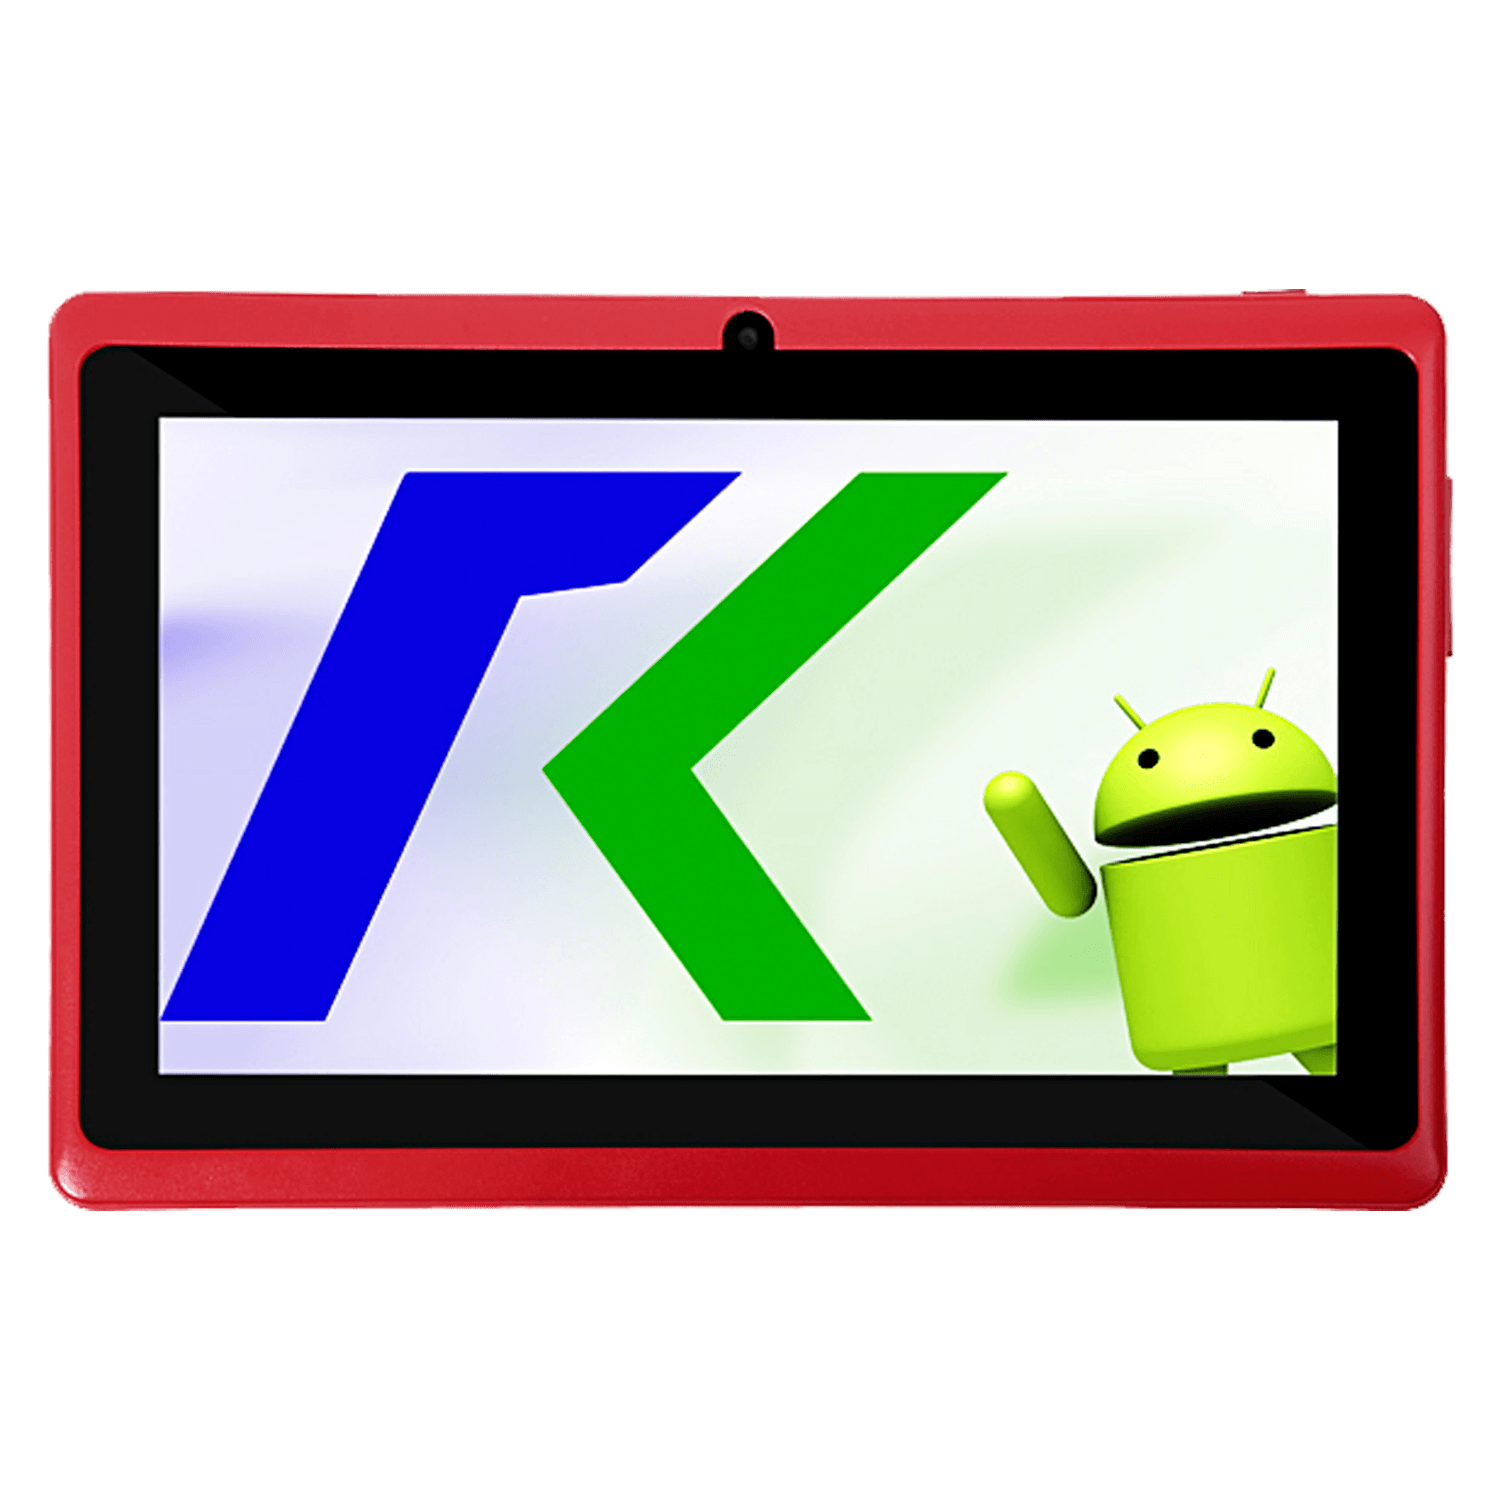 Tablet Keen A78 Kids 16GB / Wi-Fi / Tela 7" - Vermelho